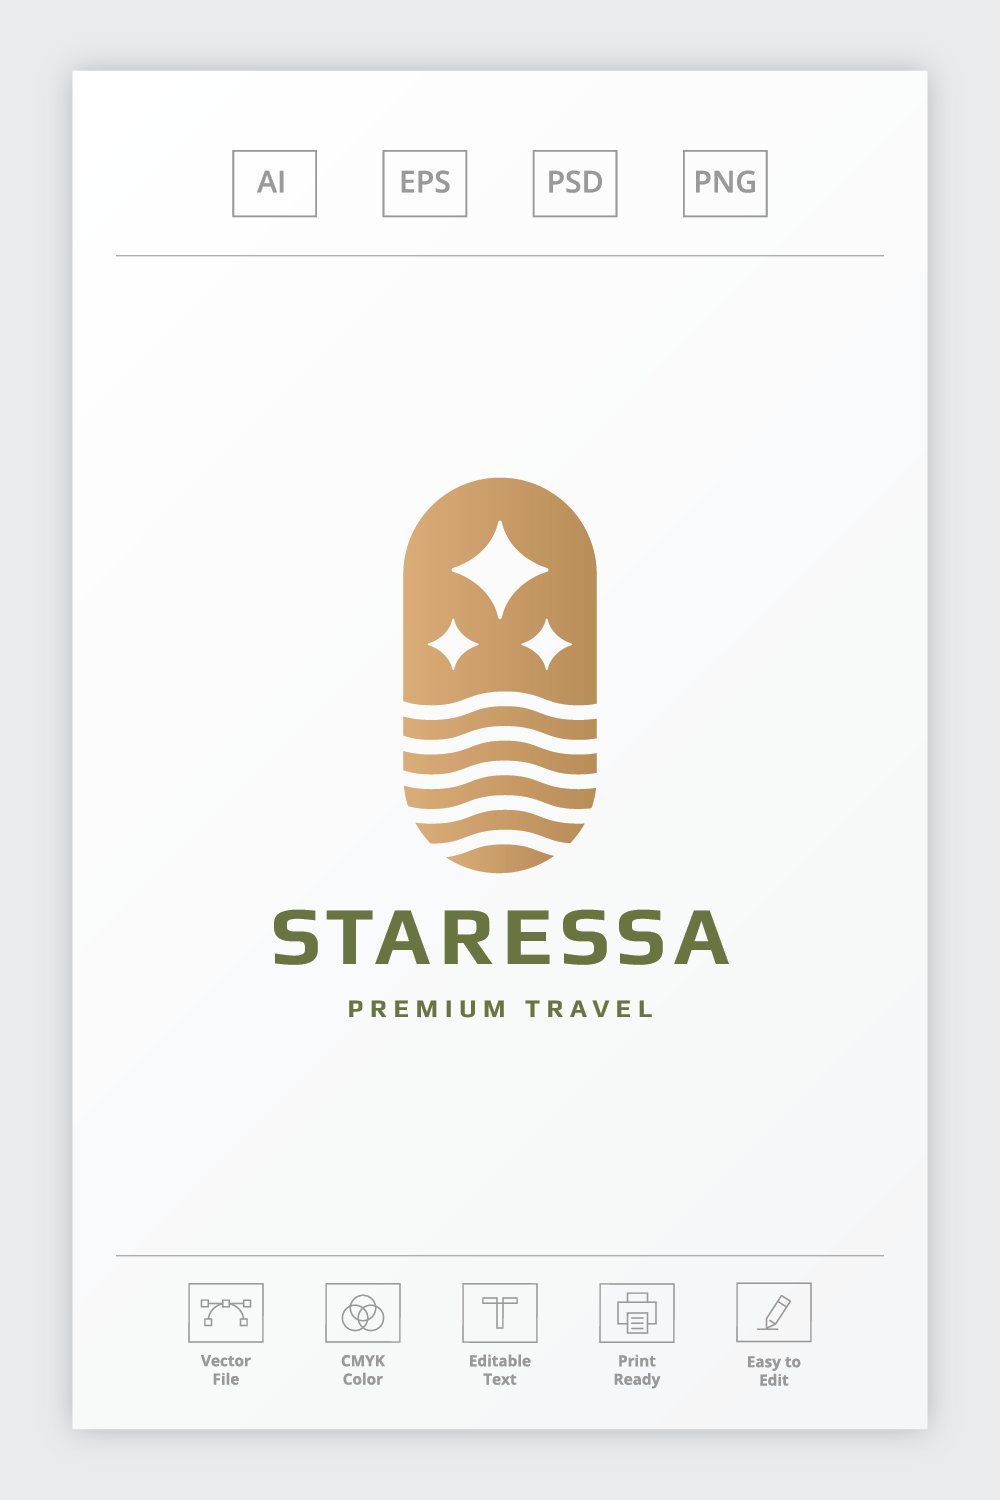 Star Travel Agent Logo pinterest preview image.